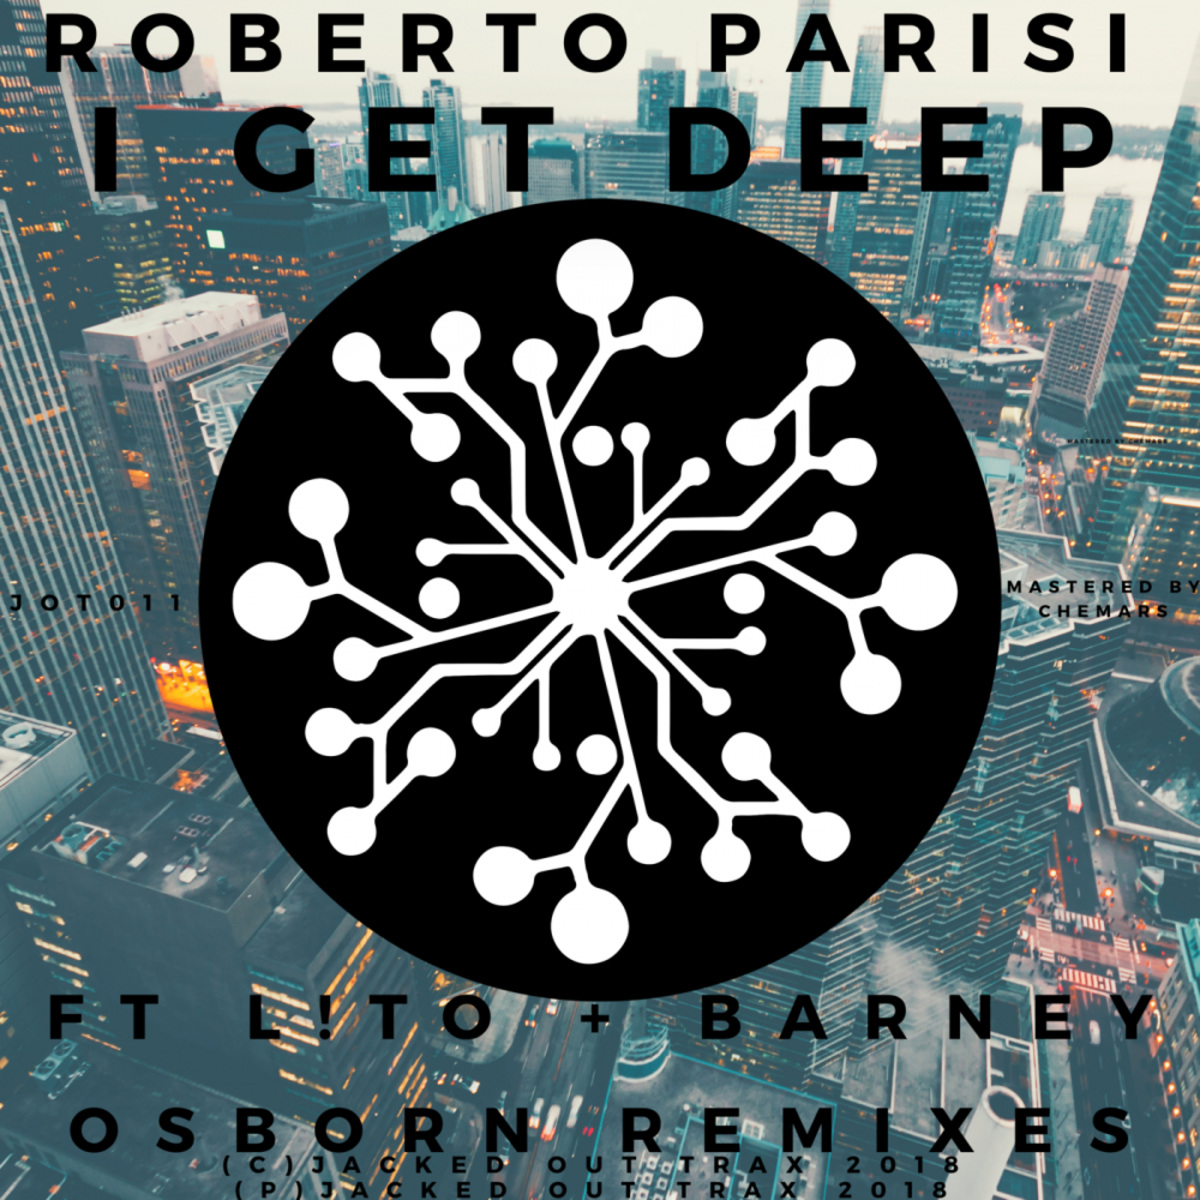 Roberto Parisi - I Get Deep / Jacked Out Trax